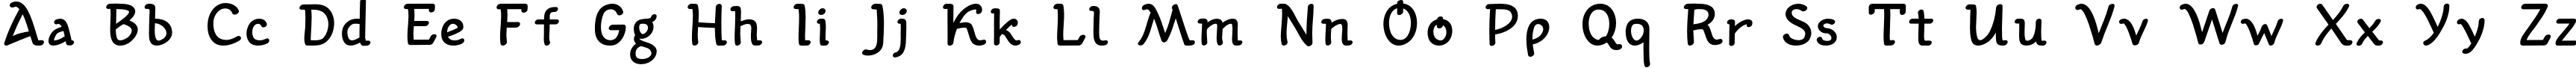 Пример написания английского алфавита шрифтом Kotyhoroshko Bold